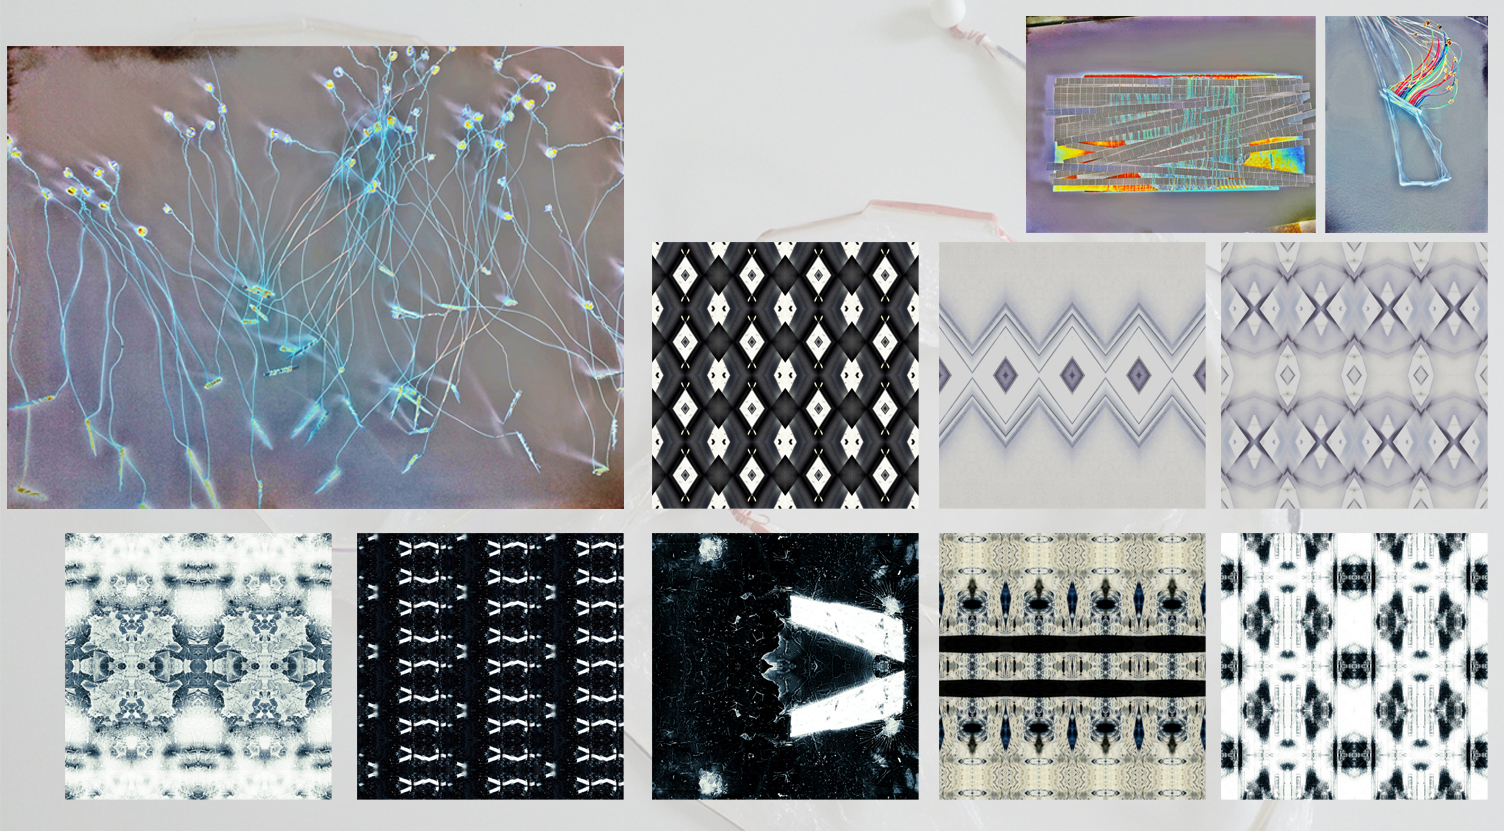 textile designs